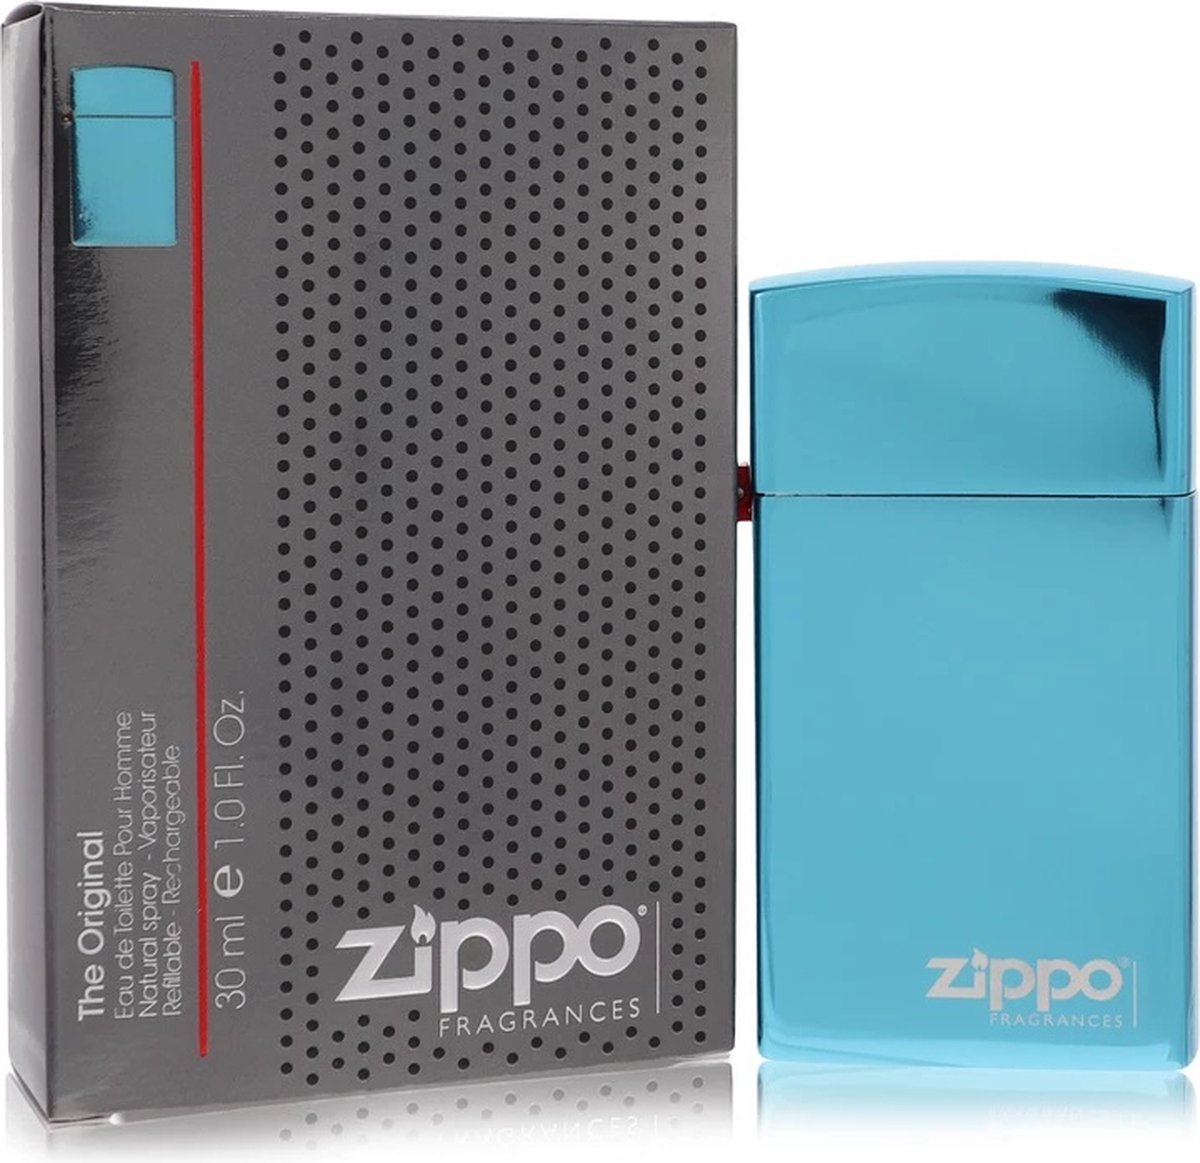 Zippo The Original Blue parfum - Eau de toilette spray navulbaar - 30 ml